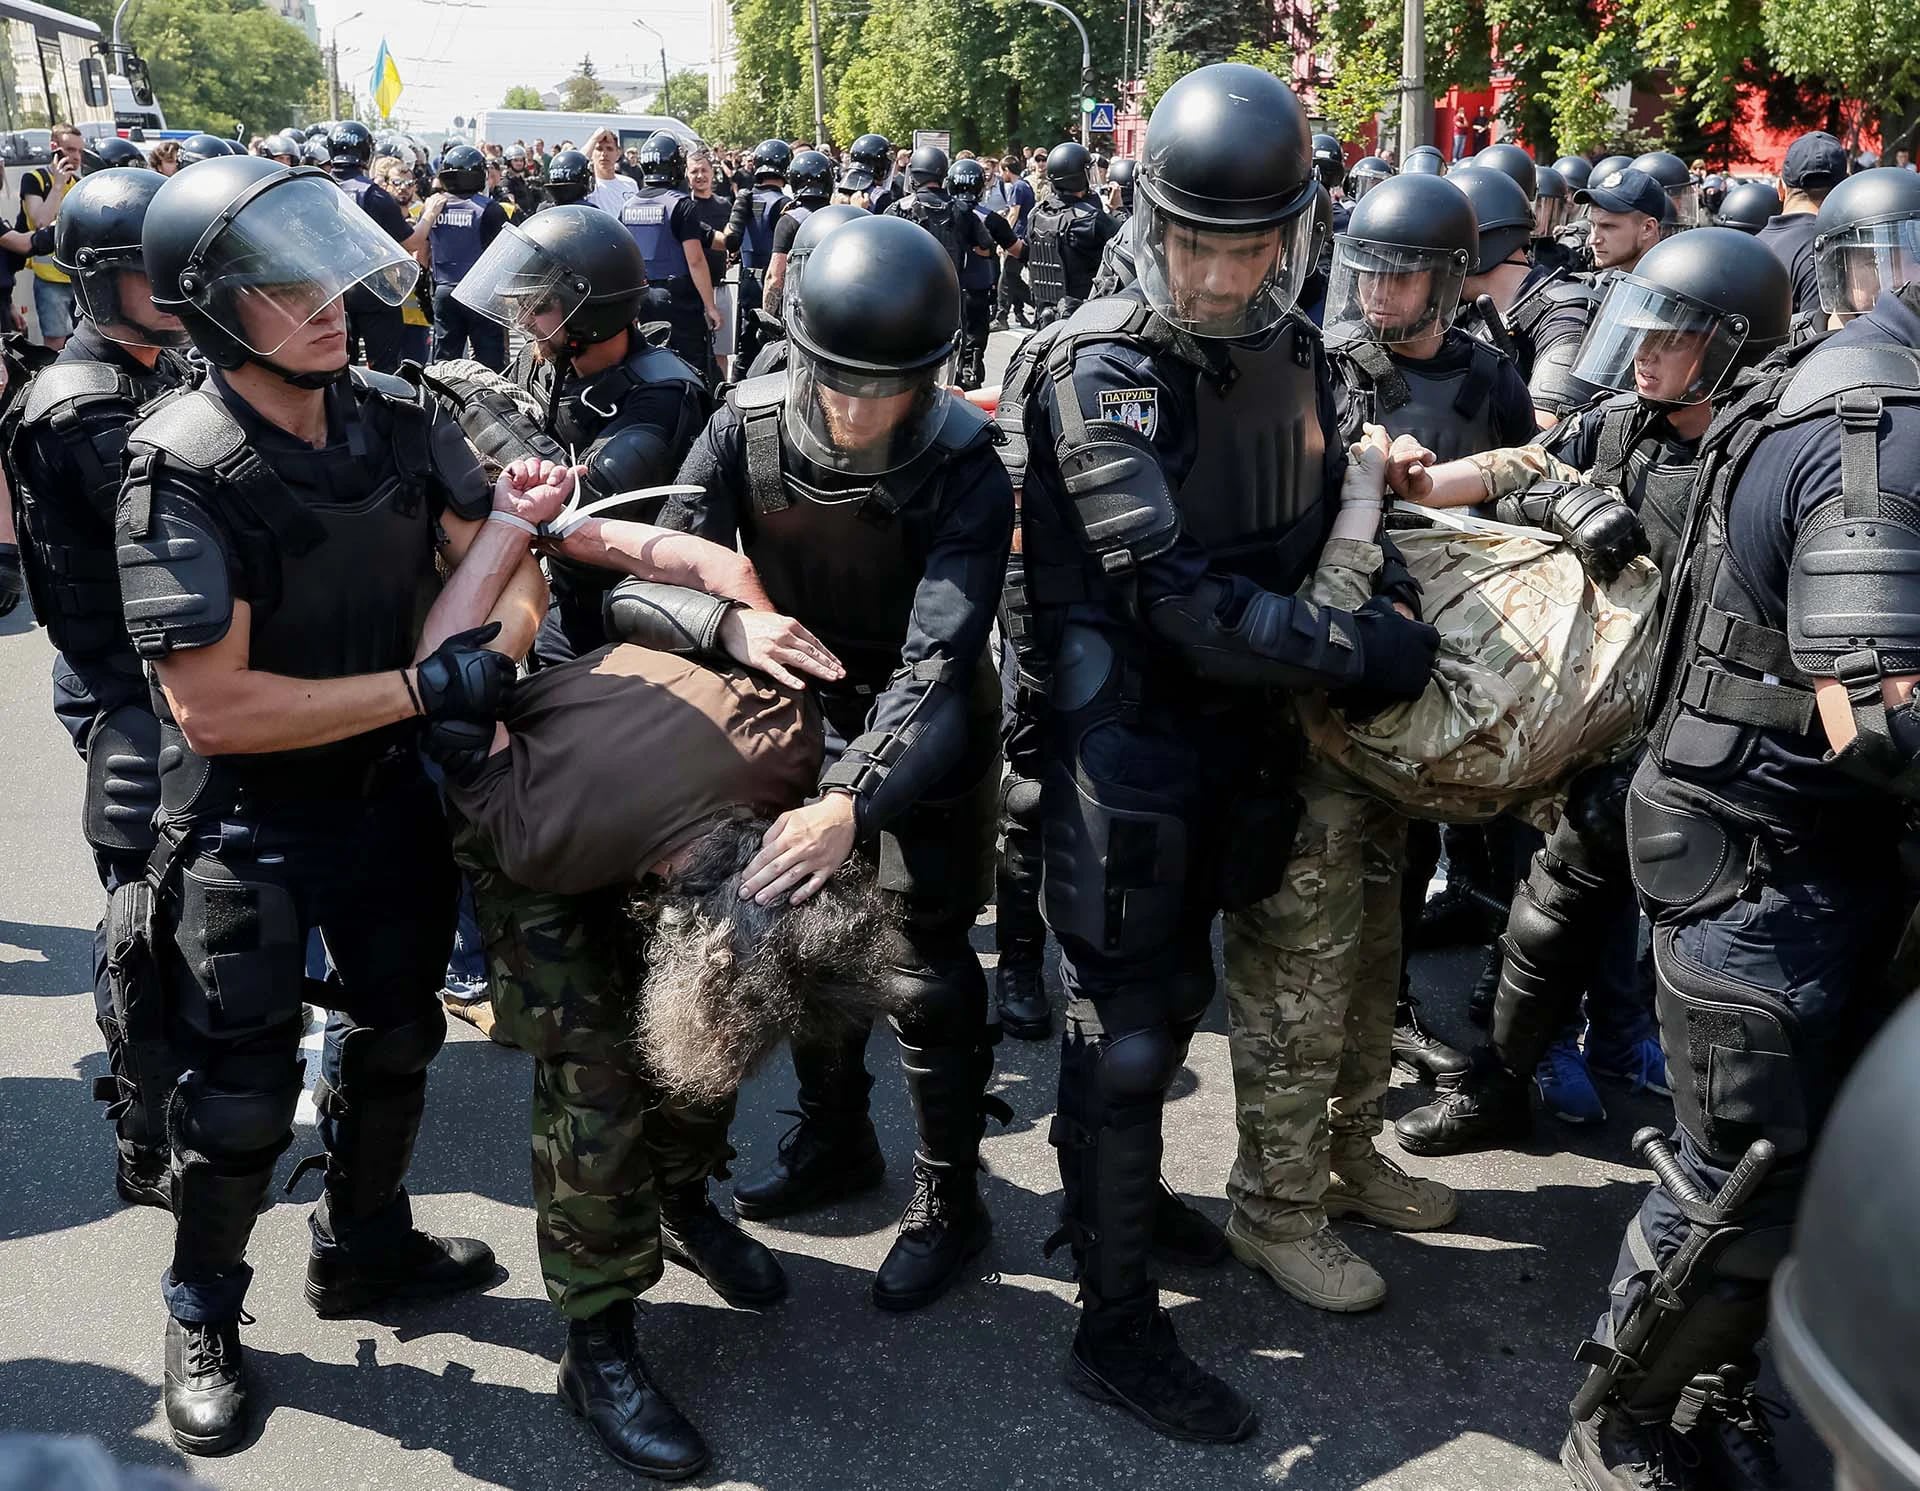 Detenciones durante la marcha anti-LGBT en Kiev, Ucrania (REUTERS)